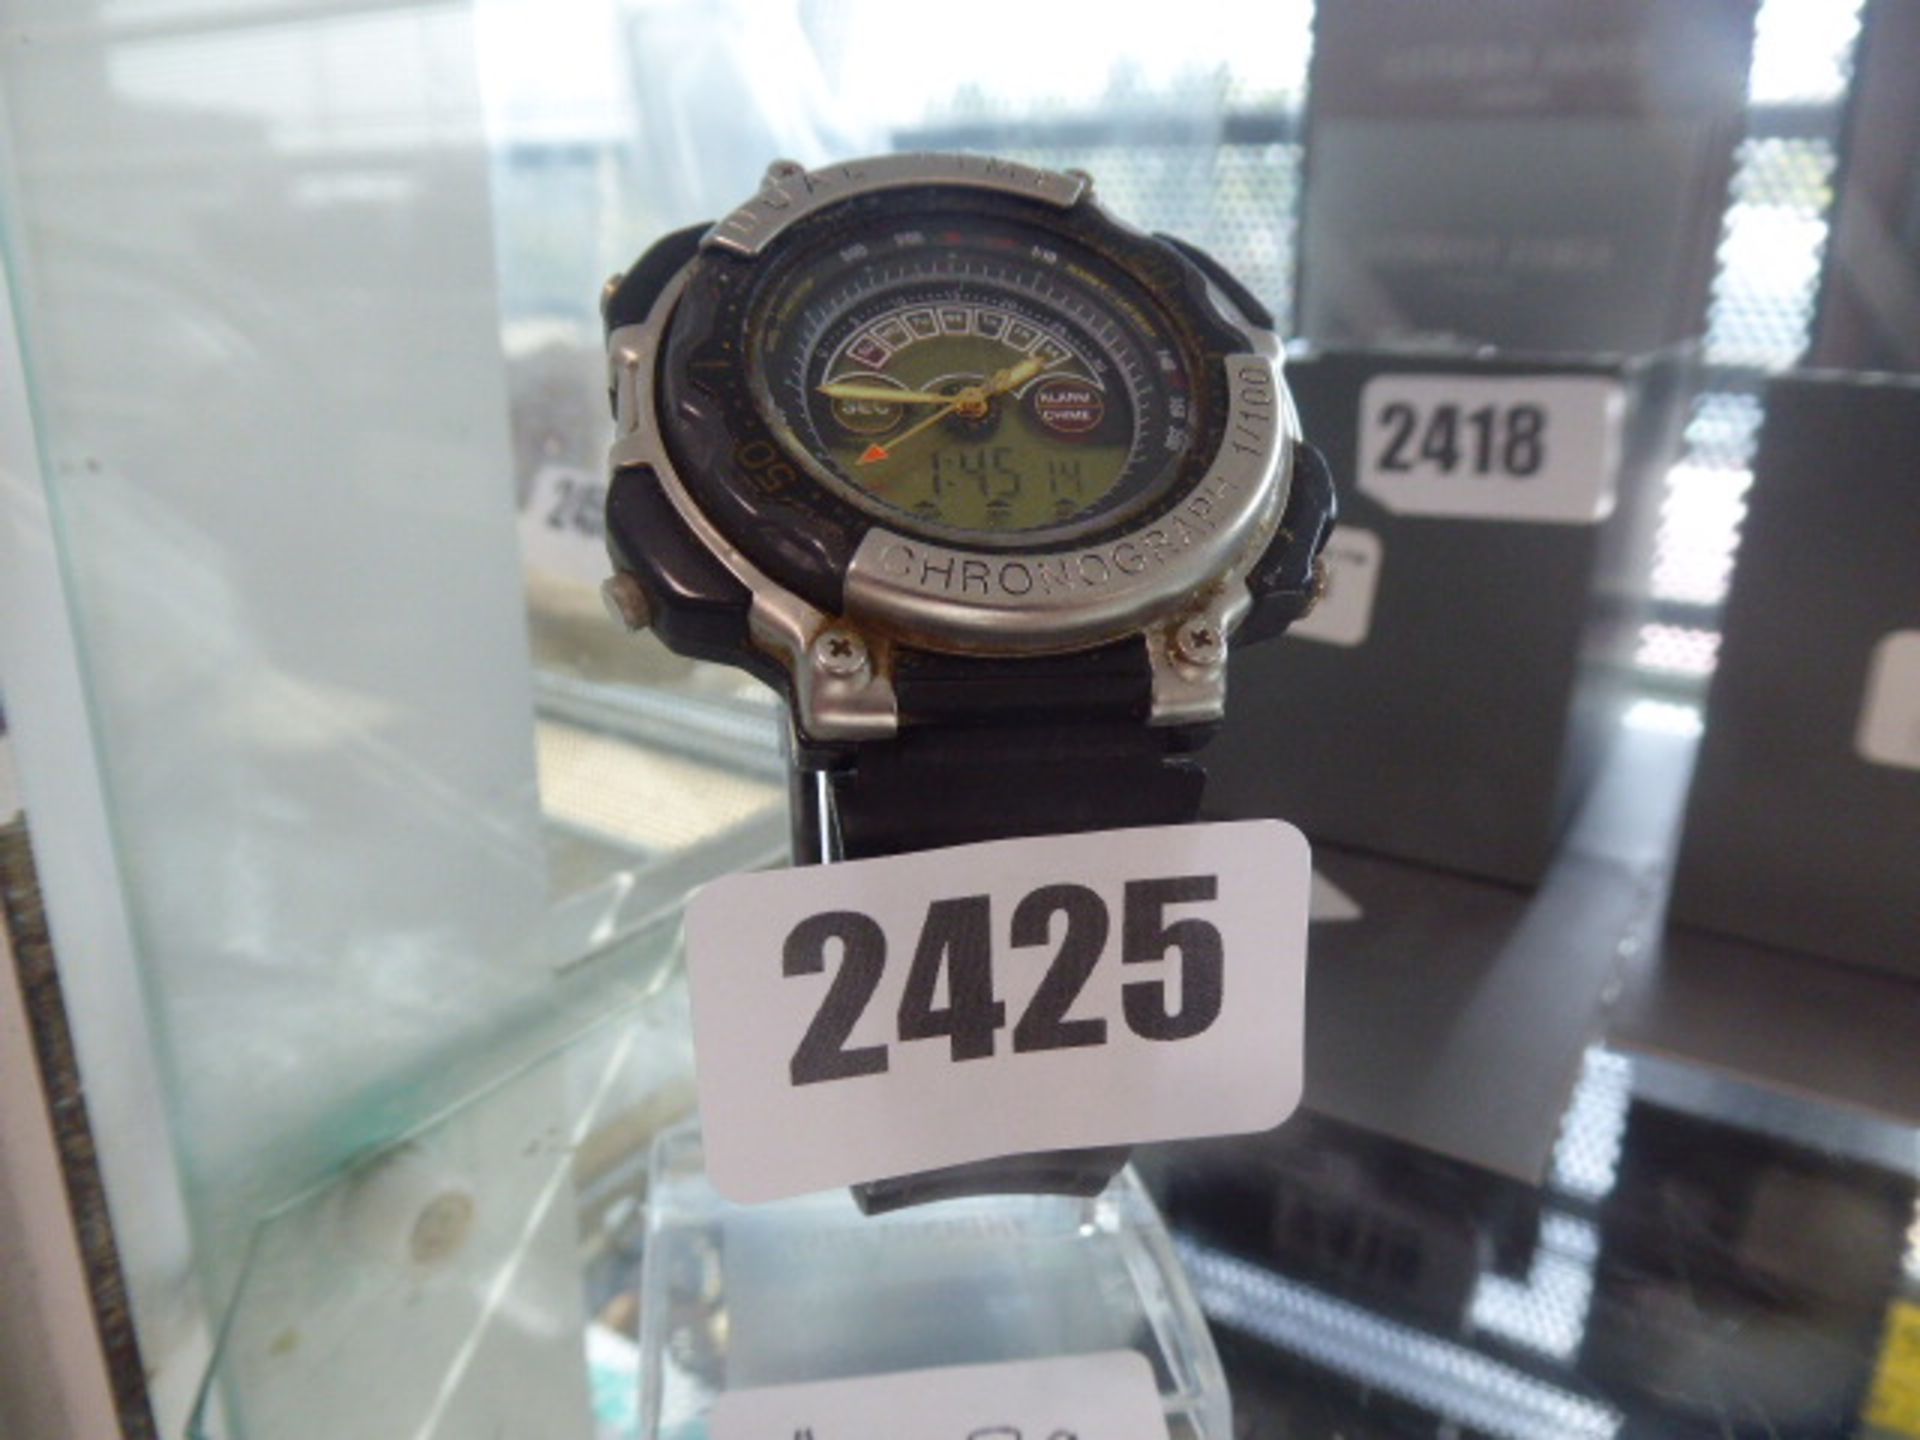 Jewel time chronograph wristwatch with digital display